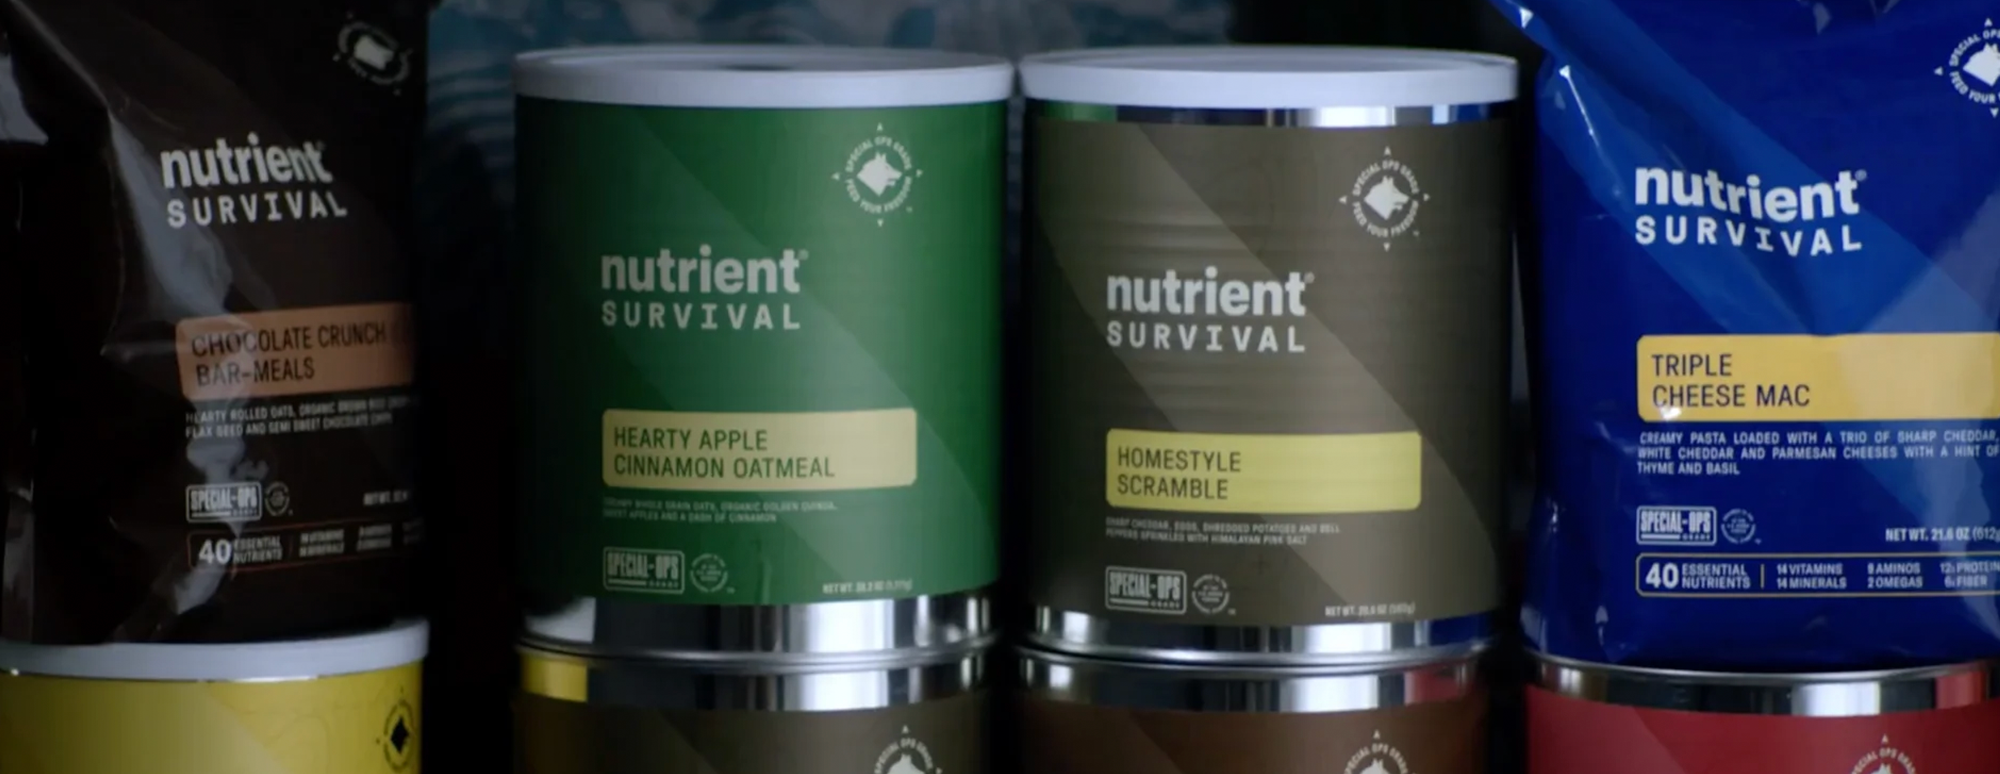 Nutrient Survival